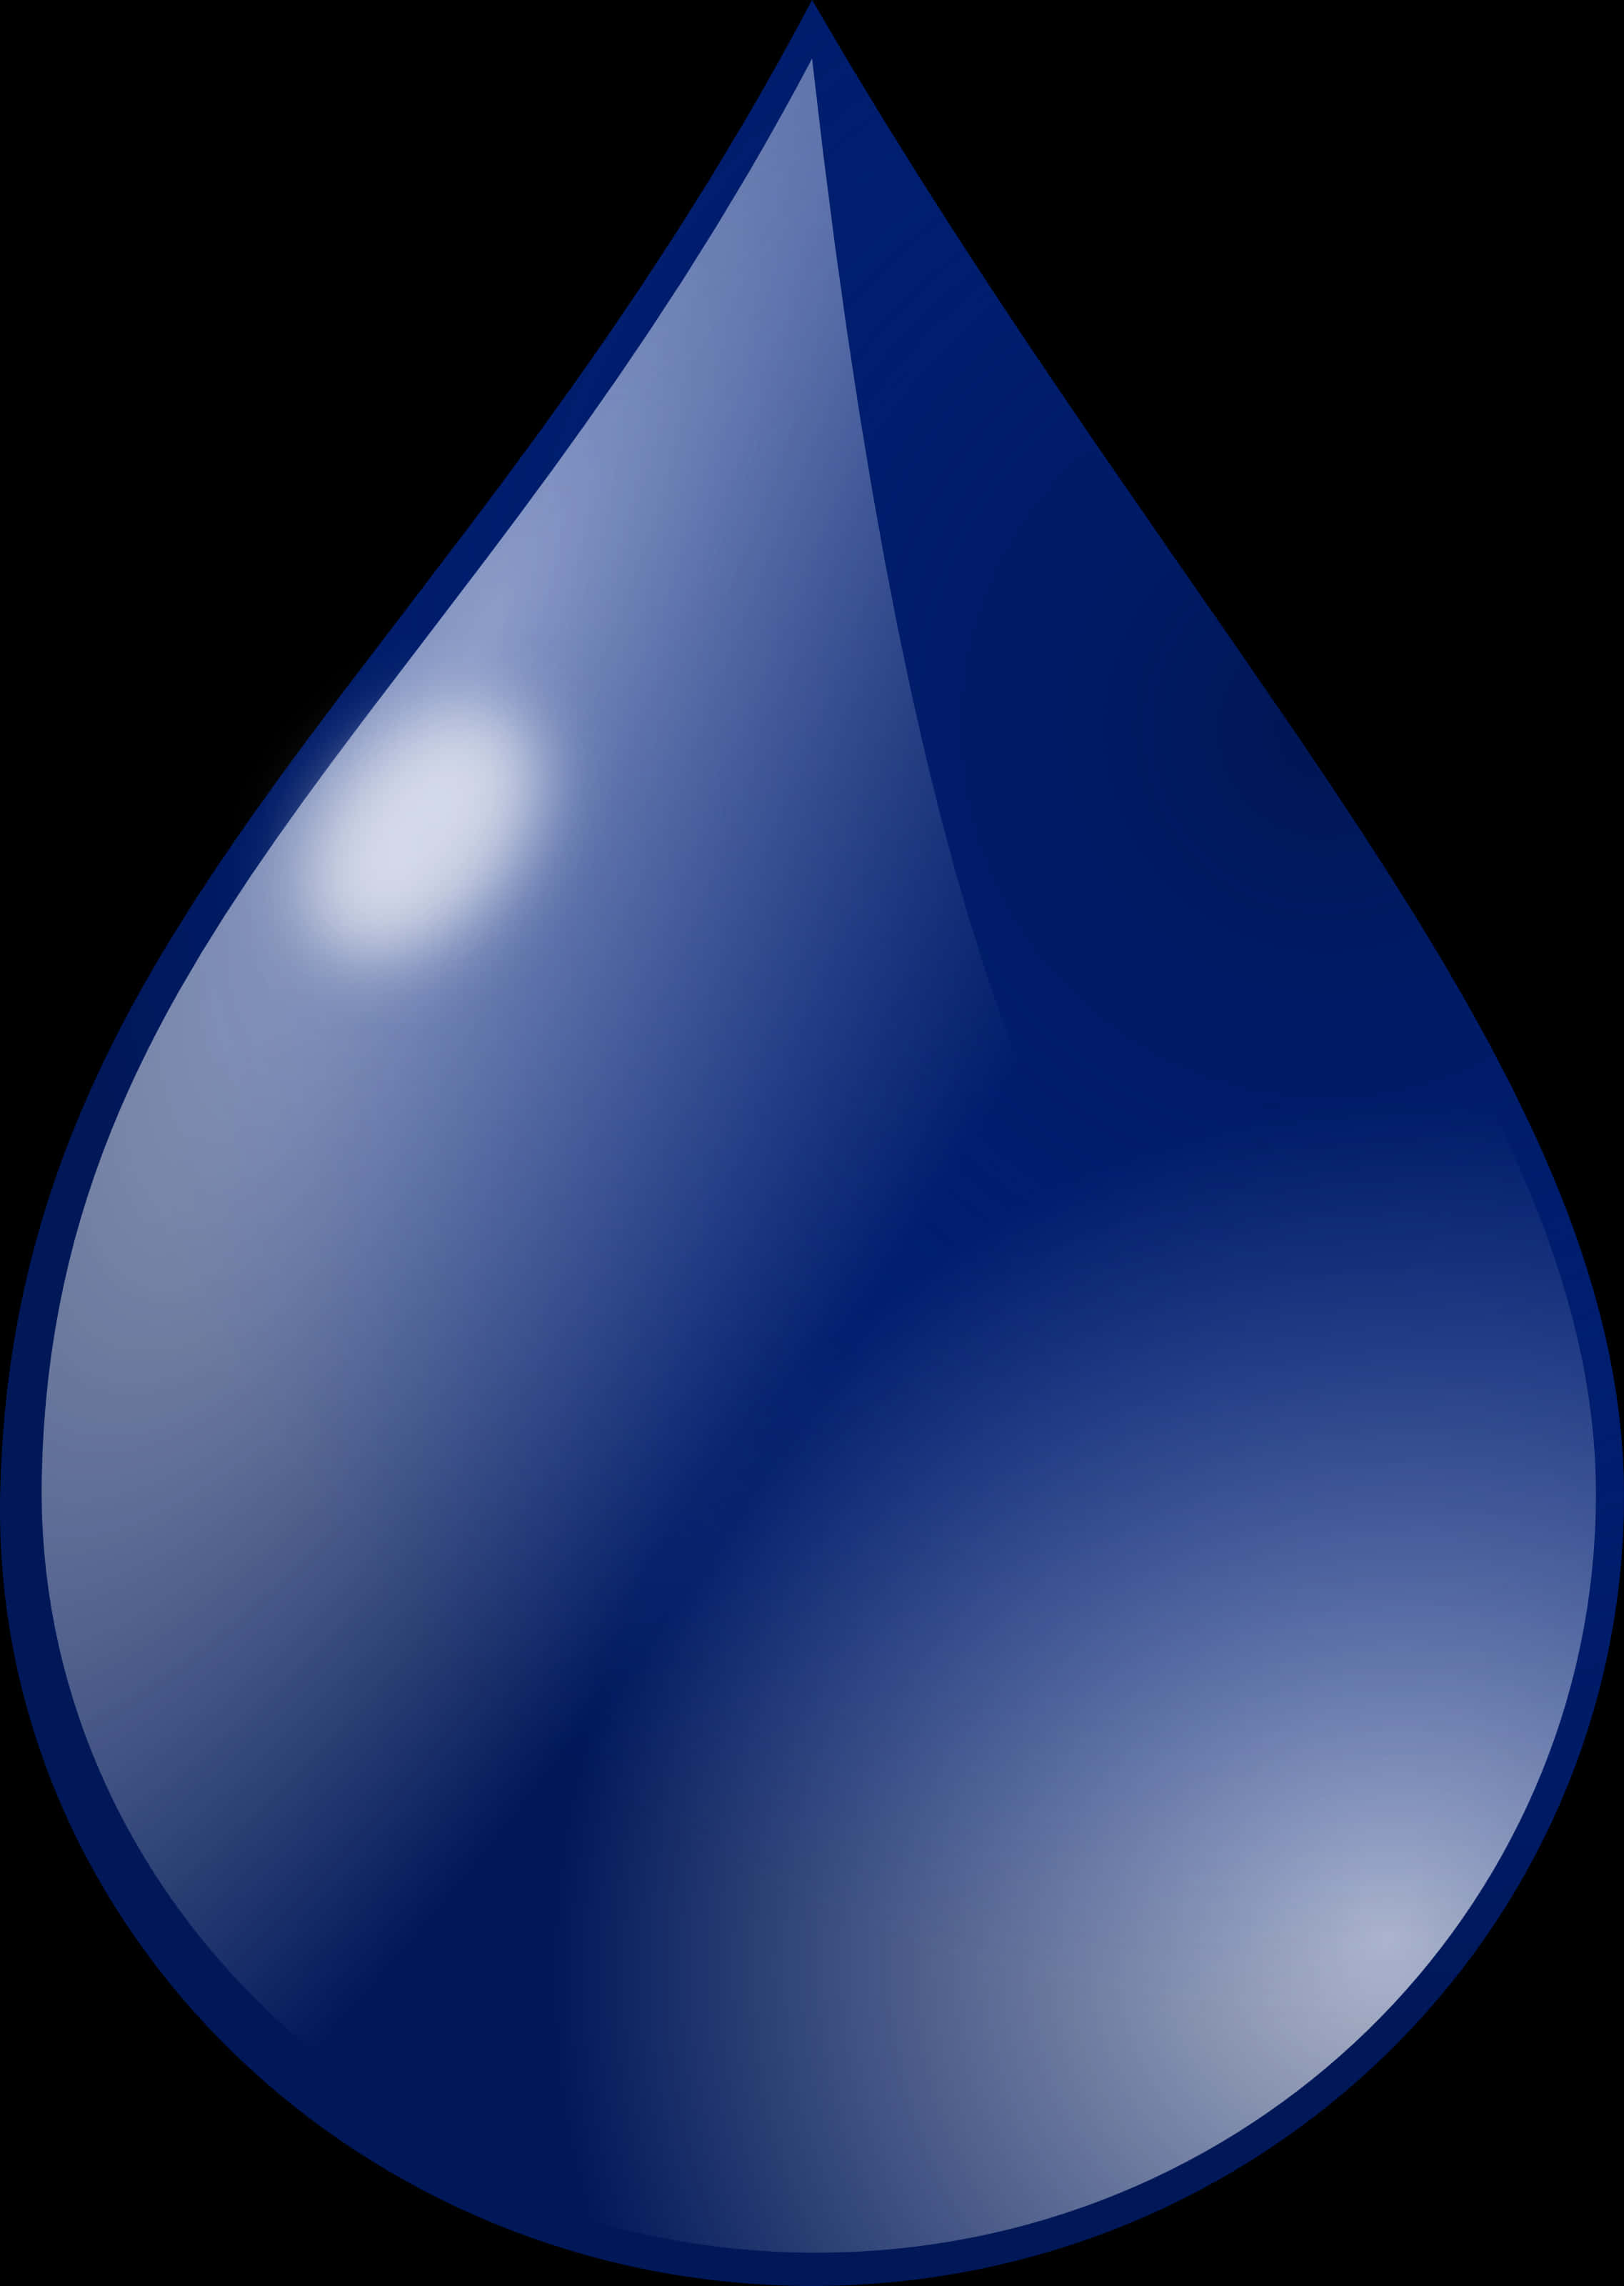 Blue Tear Drop Graphic